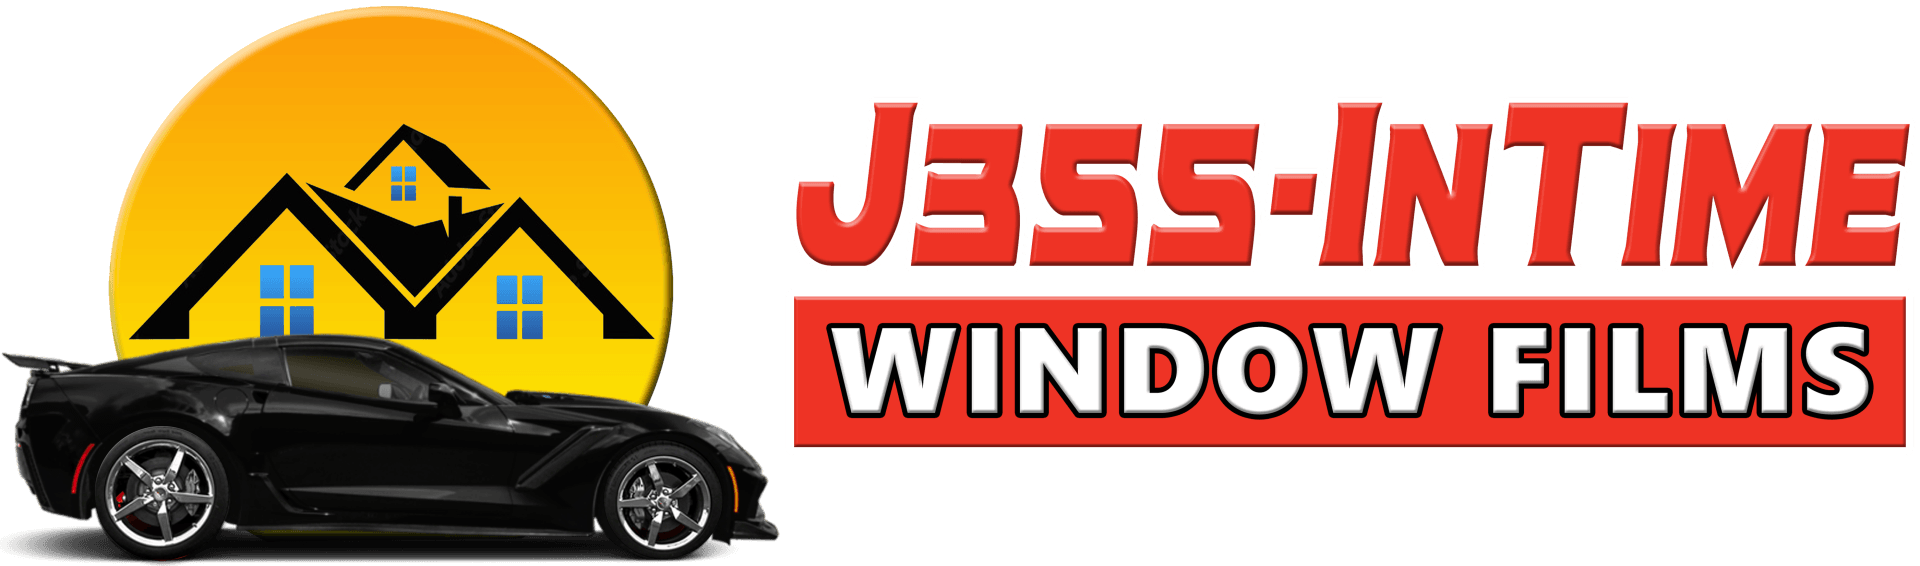 J3ss-InTime Window Films Ocala FL